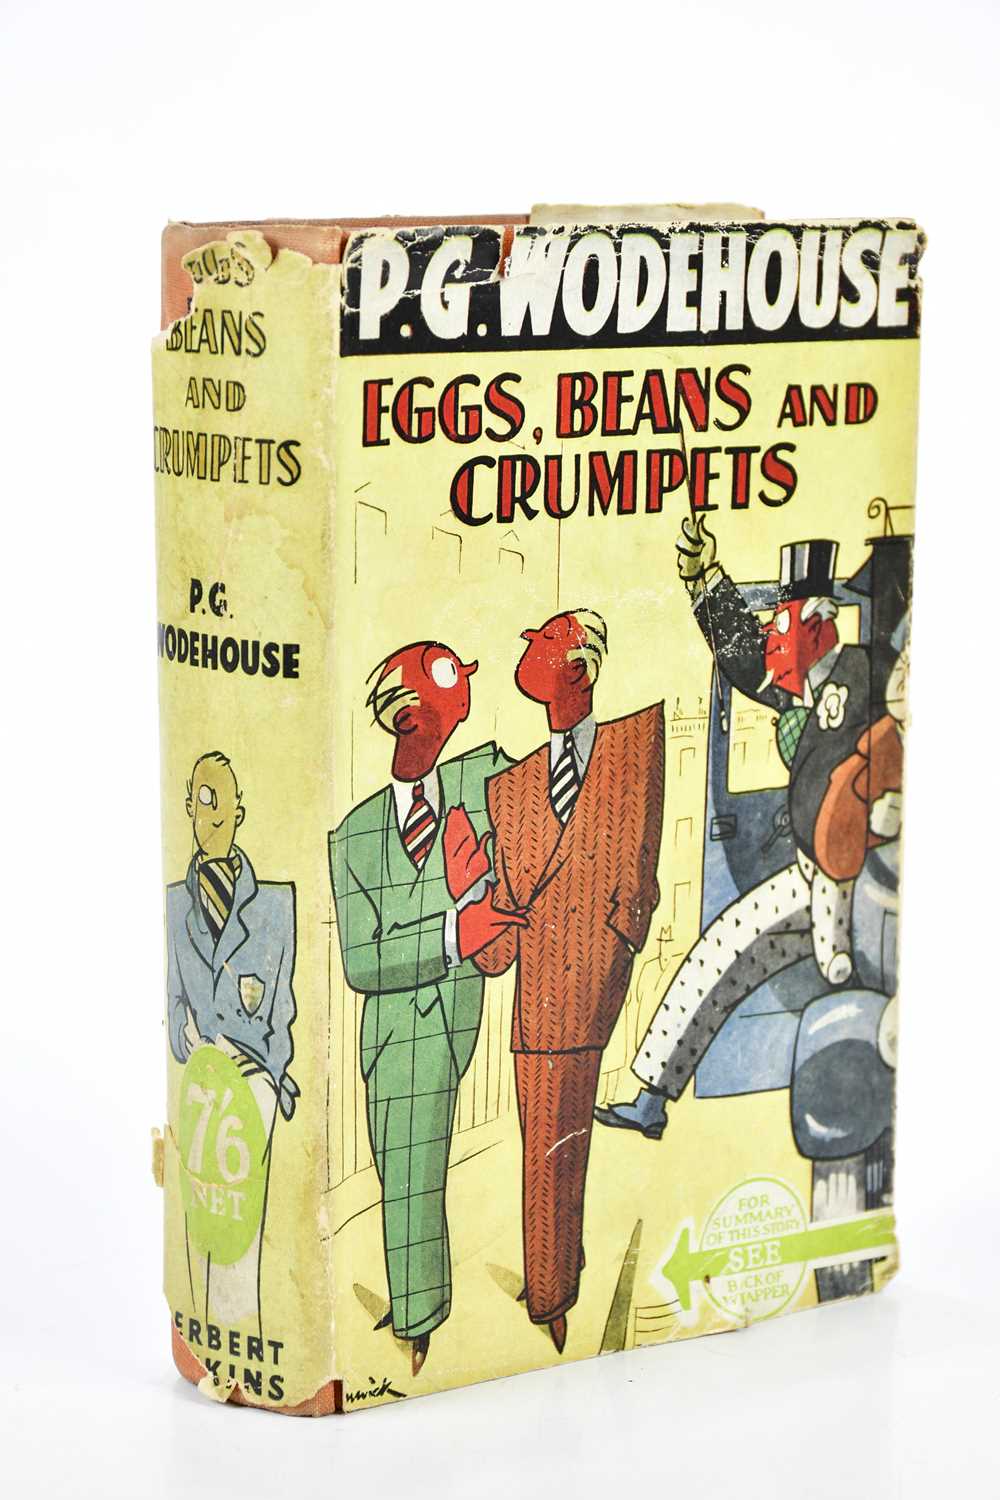 WODEHOUSE (P.G), EGGS, BEANS AND CRUMPETS, first edition, d.j., orange cloth, Herbert Jenkins,